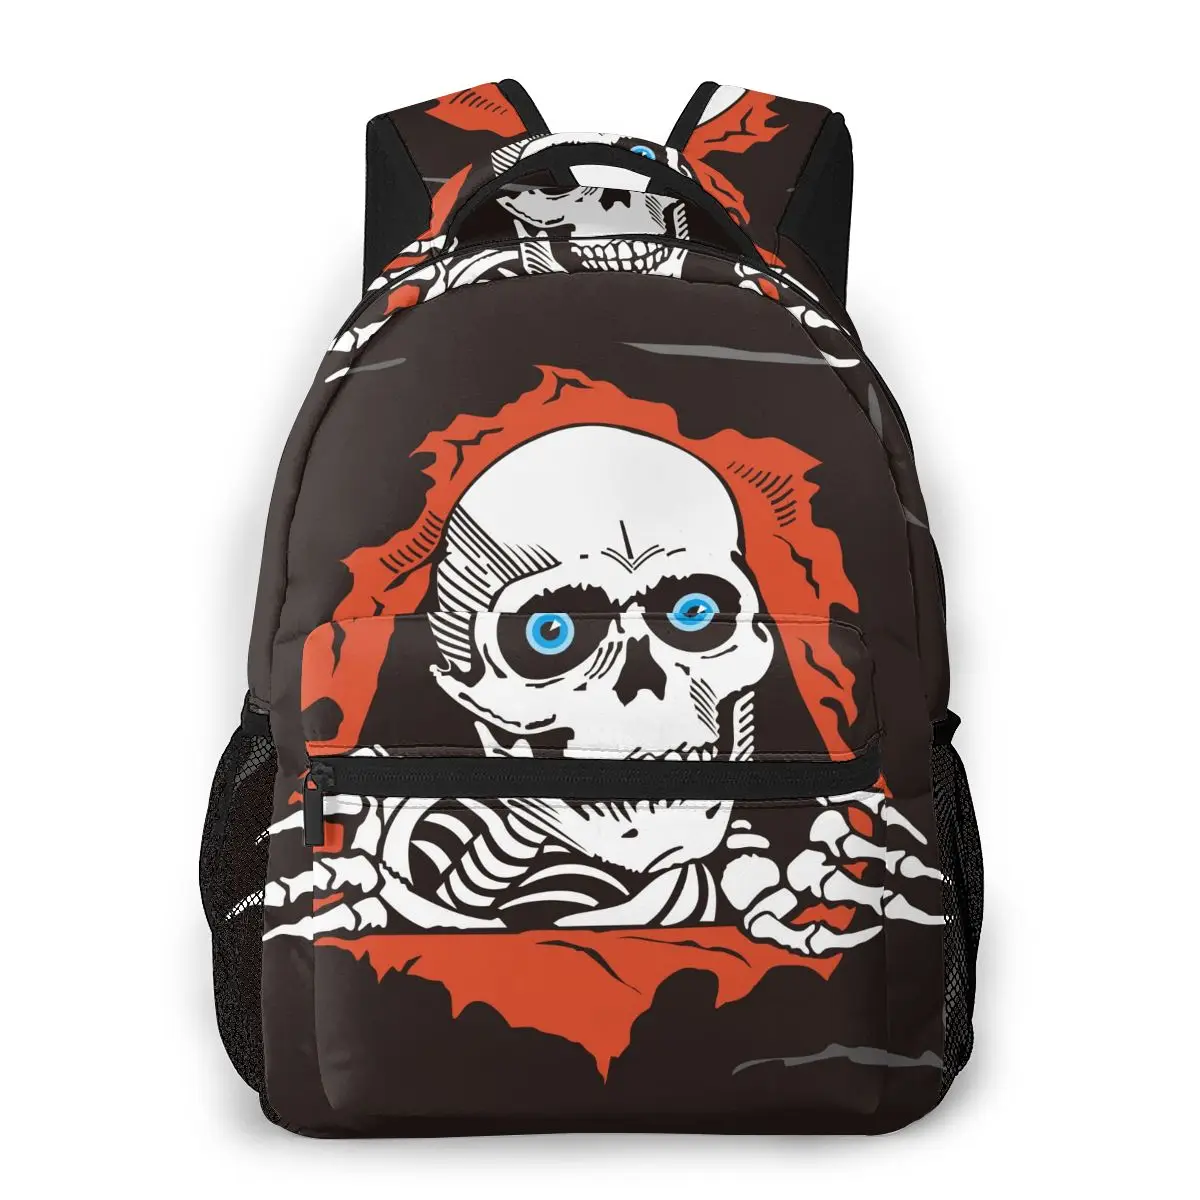 cool backpacks accessories	 Women Backpack Kids School Bag for Teenage Girls Creepy Skull Female Laptop Notebook Bagpack Travel Back Pack 2021 stylish backpack purse Stylish Backpacks